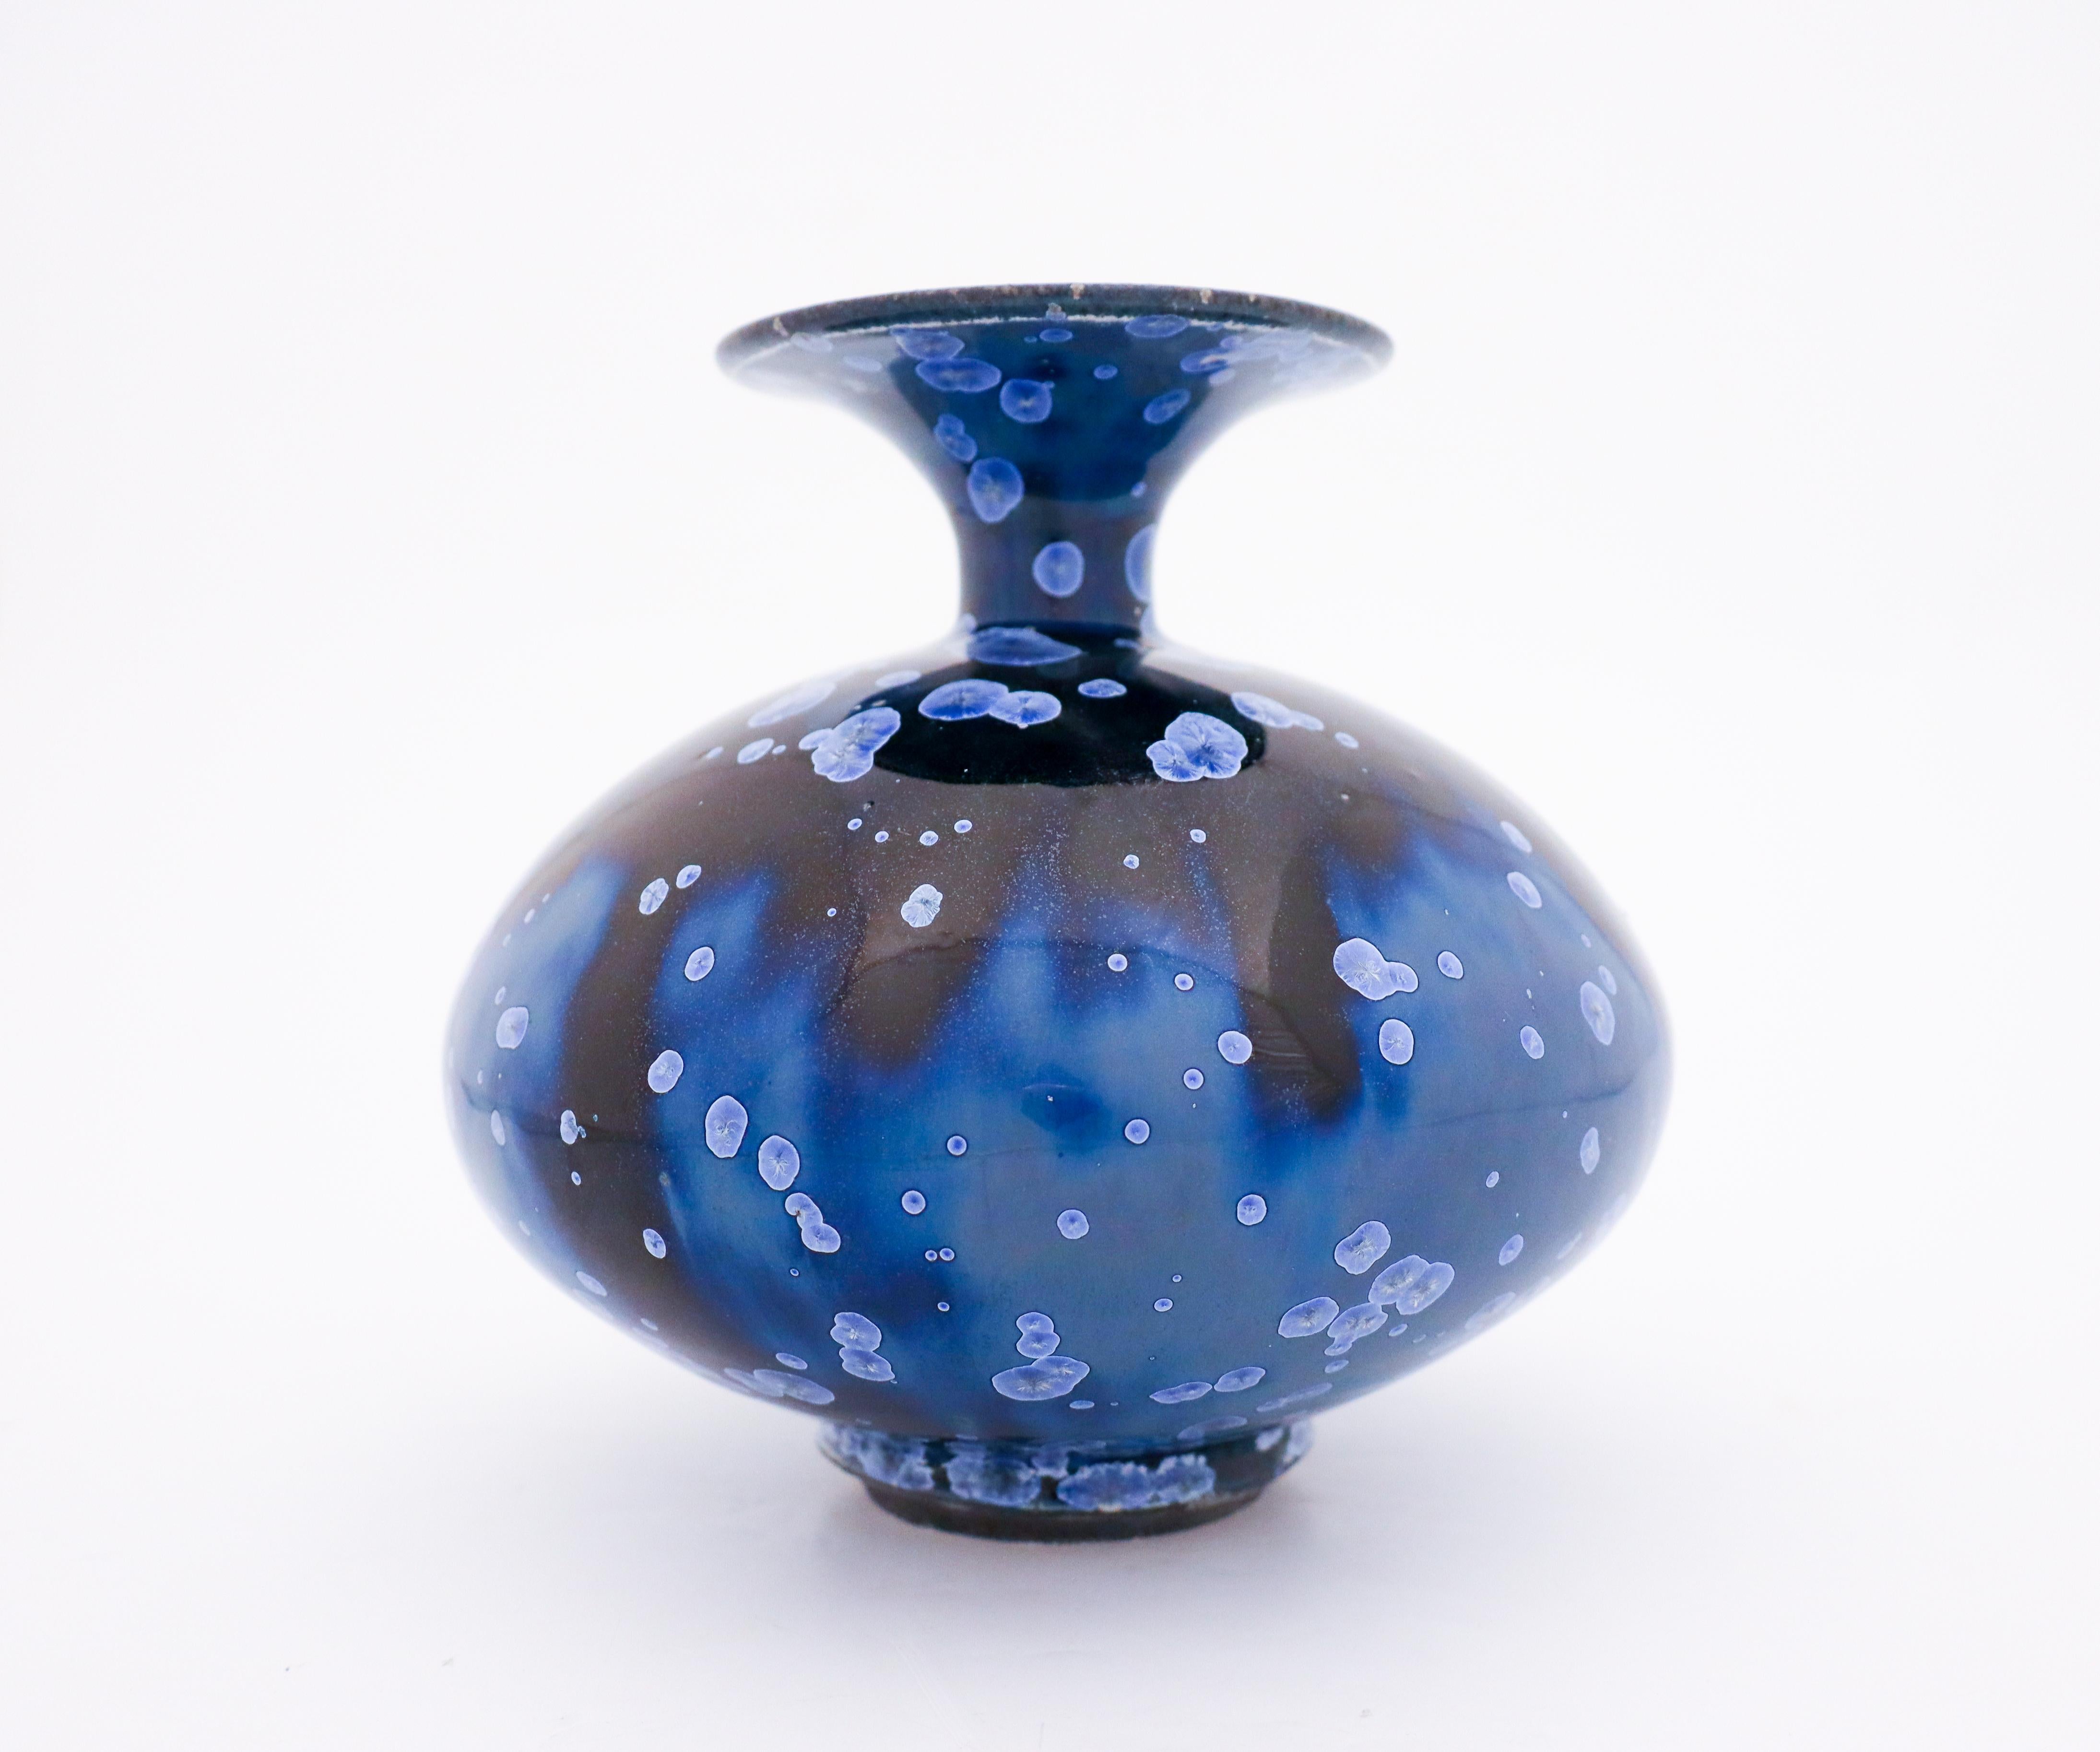 Glazed Isak Isaksson, Black & Blue Crystalline Glaze, Contemporary Swedish Ceramicist